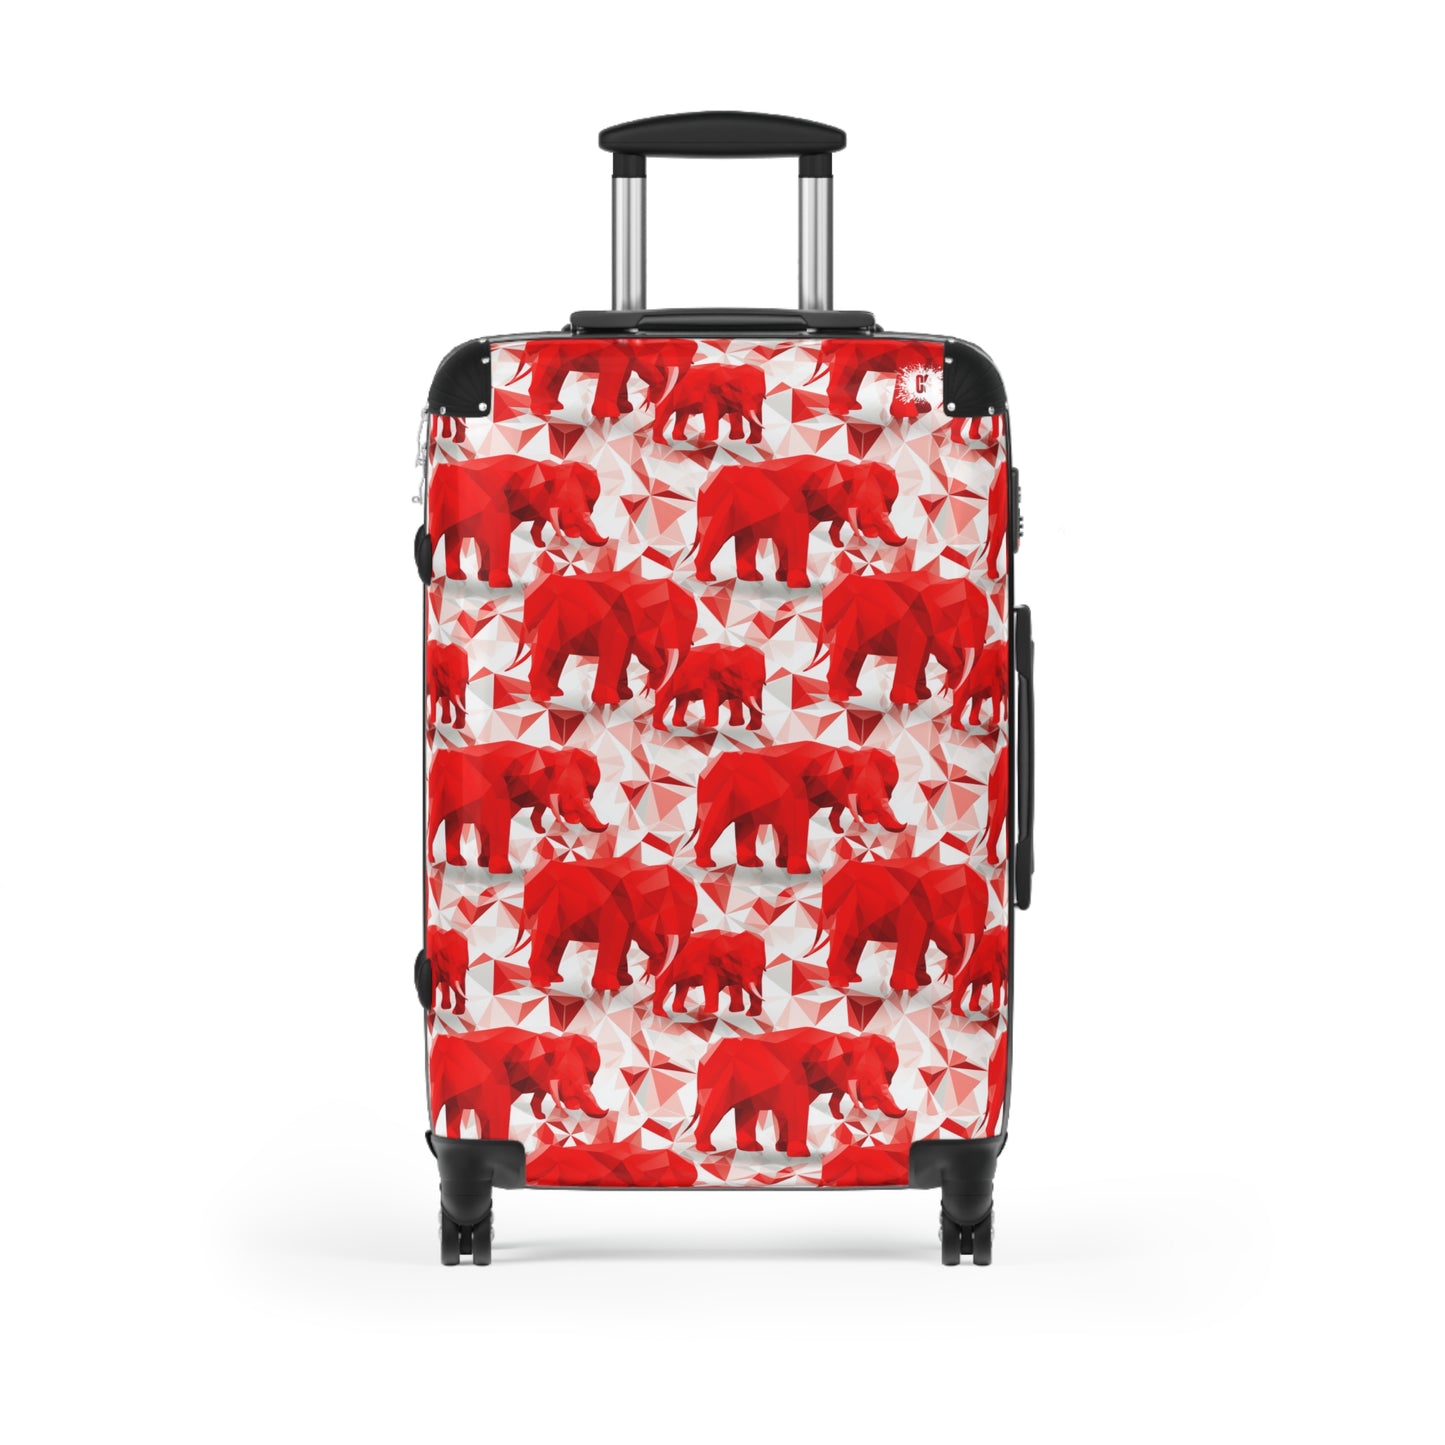 Elephants & Pyramids Suitcase